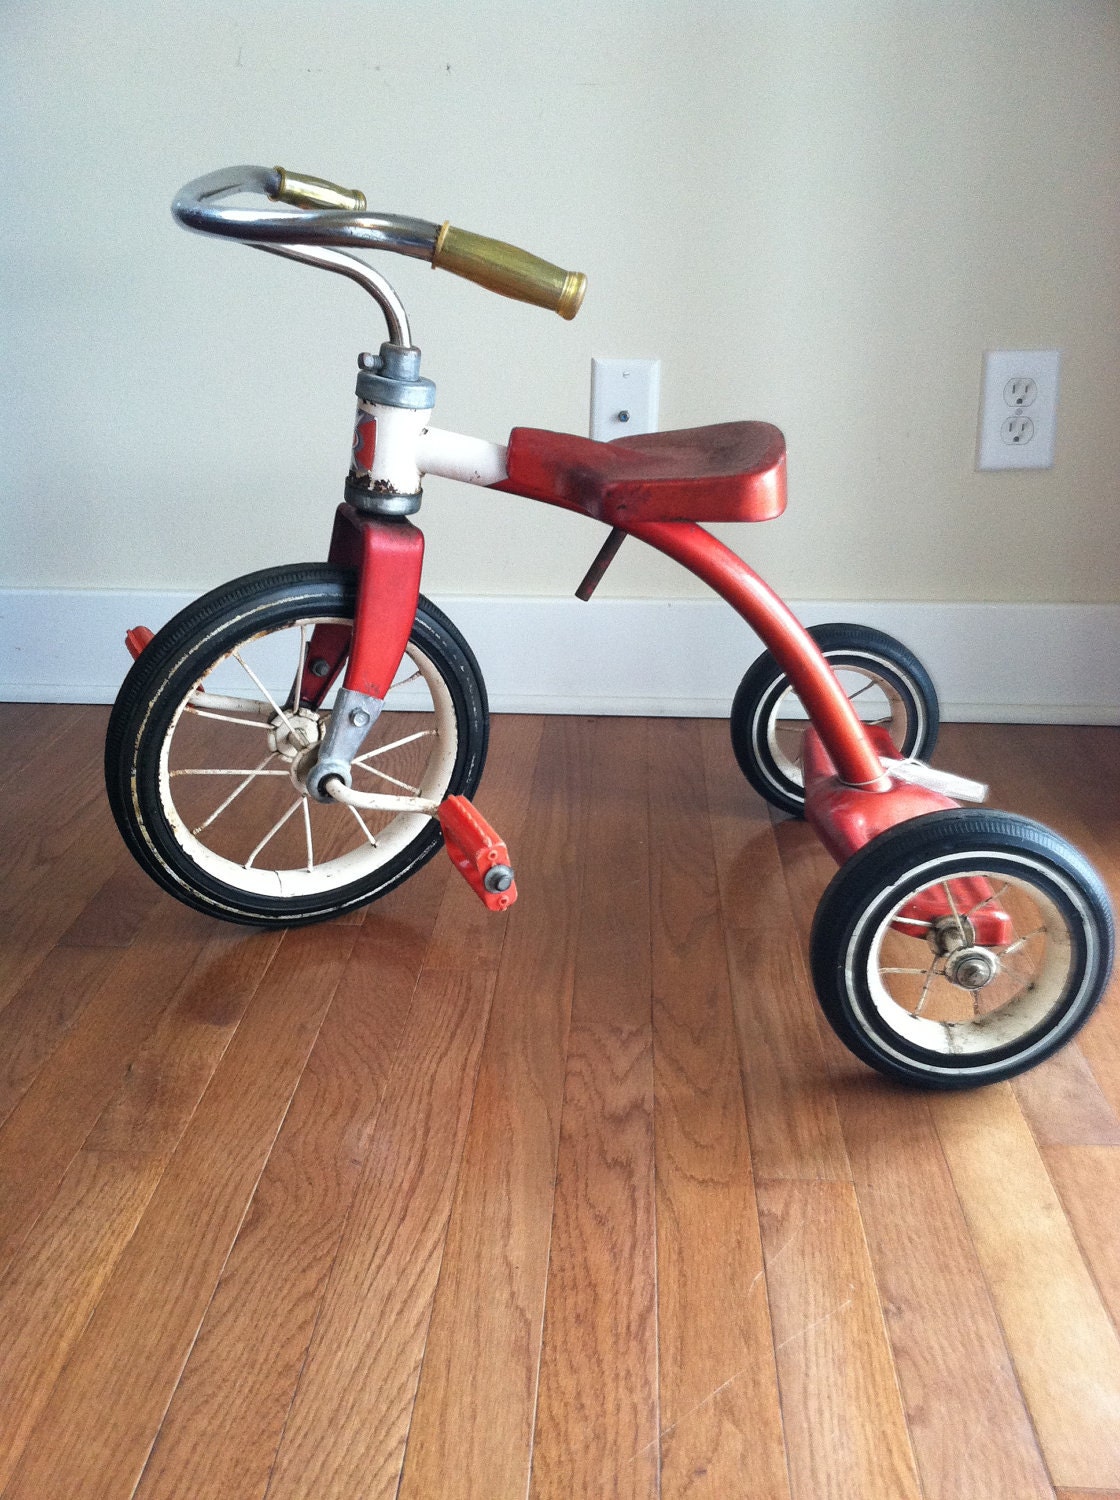 Трёхколёсный велосипед 90х. Велосипед детский 90-х. Детский велосипед 80х. Трёхколёсный велосипед 80-90 годов. Советский трехколесный велосипед